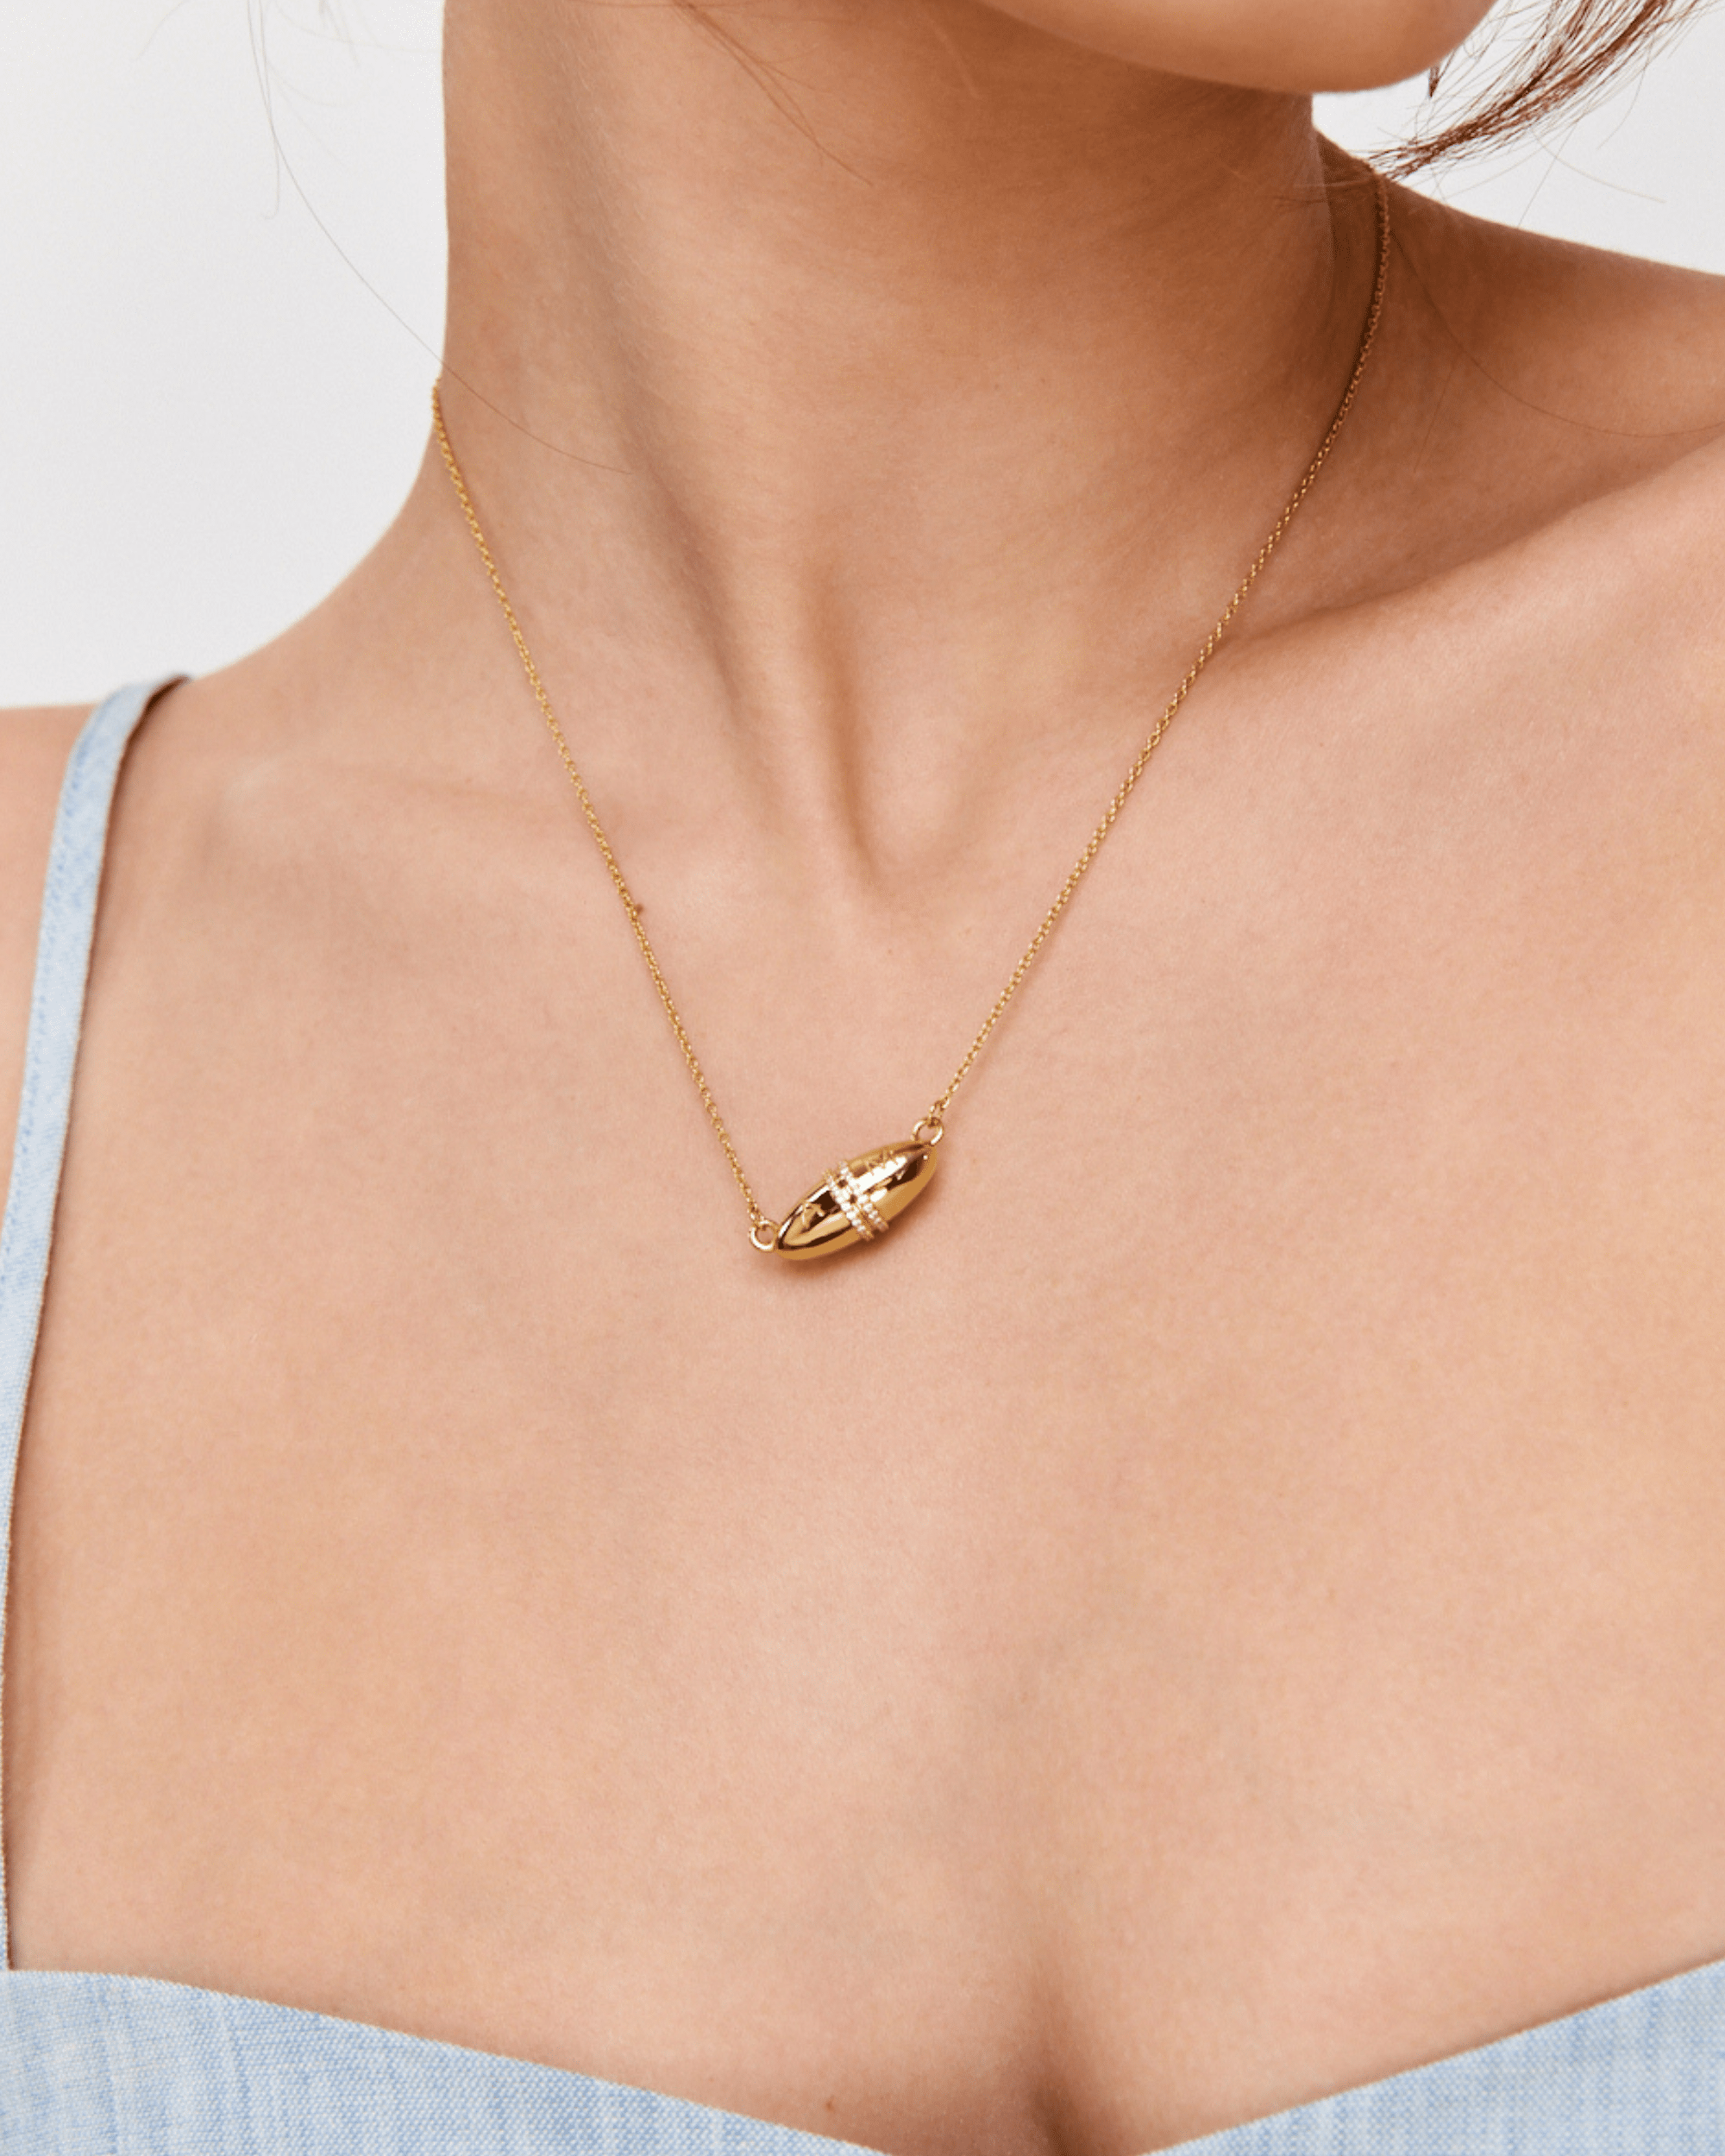 Fabergé Chain Necklace - 925 Sterling Silver Necklaces magal-dev 